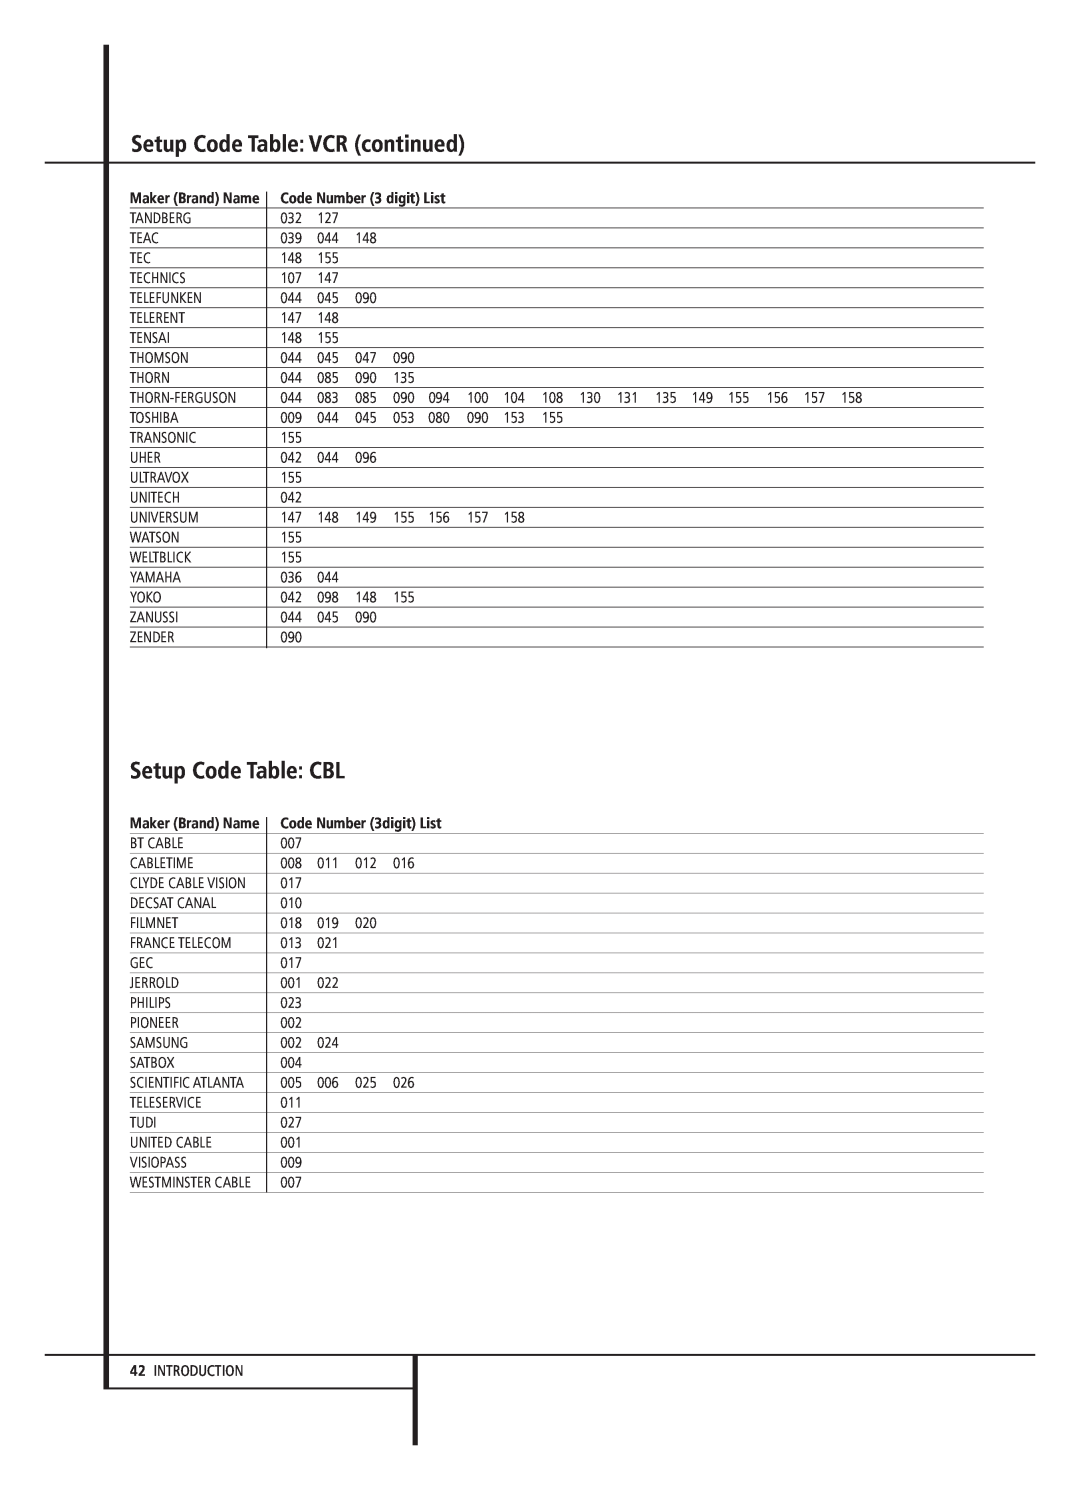 Harman-Kardon AVR 2000 owner manual Setup Code Table CBL, Setup Code Table VCR continued, Code Number 3digit List 